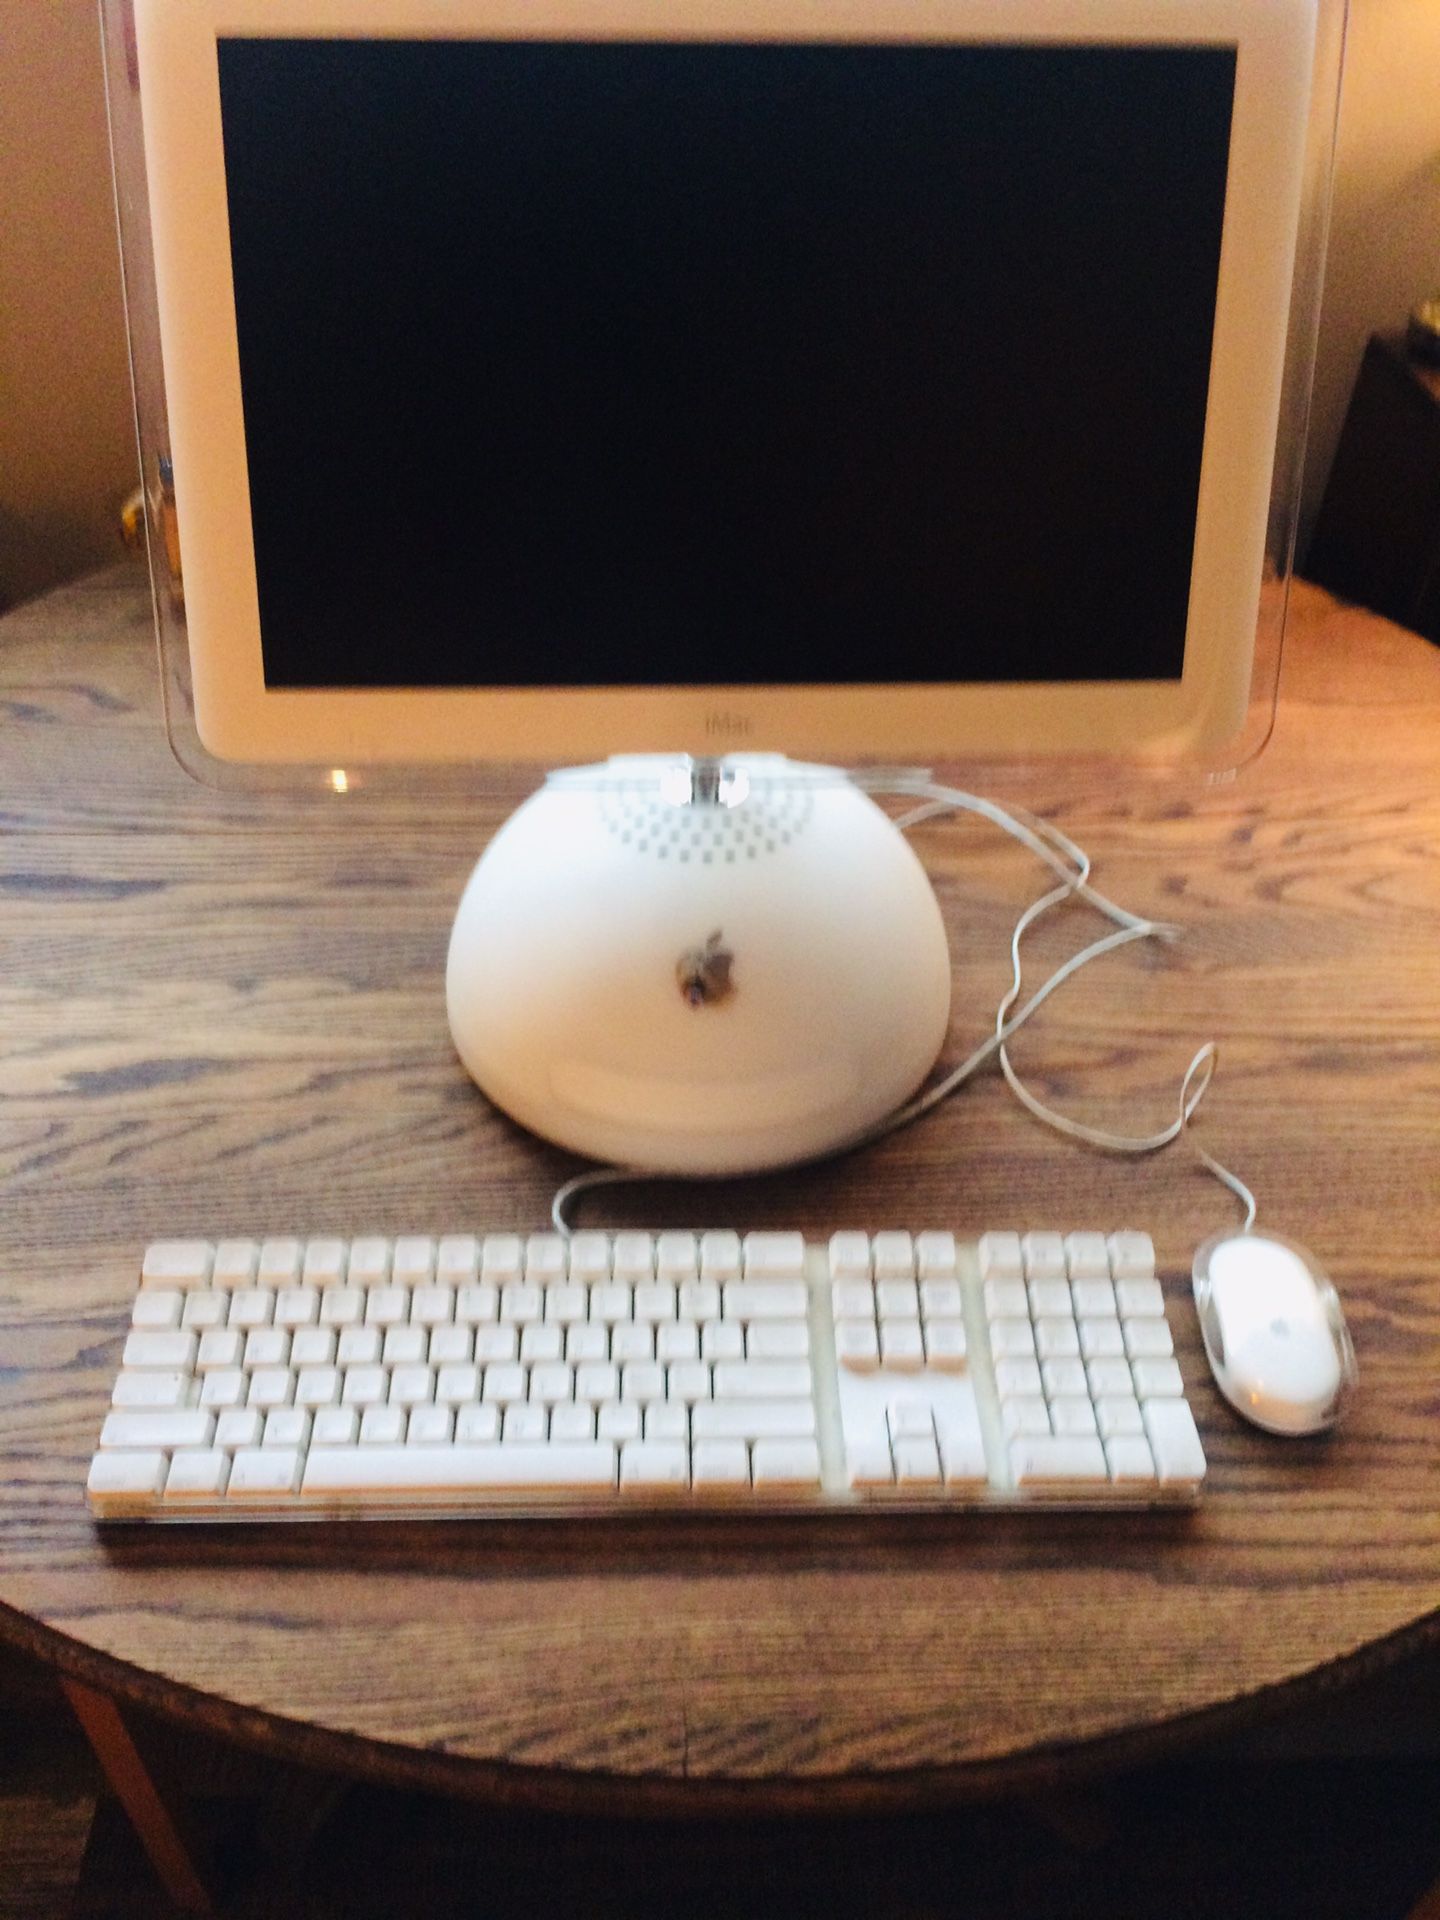 Vintage 15” iMac Computer PowerPC G4 💻💻💻